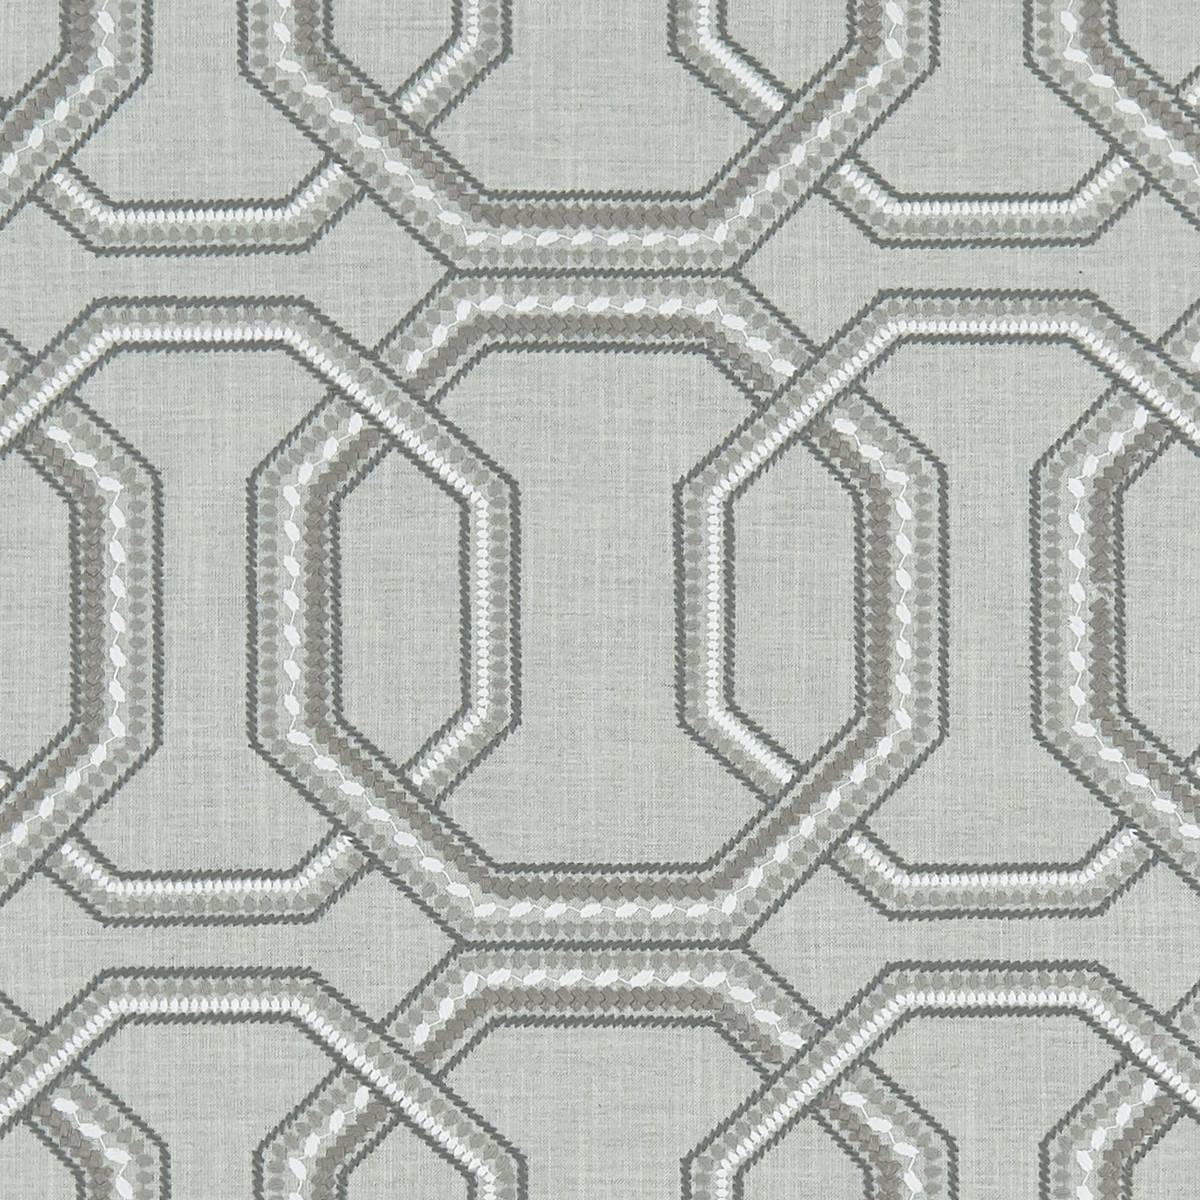 Repeat Silver Fabric by Clarke & Clarke